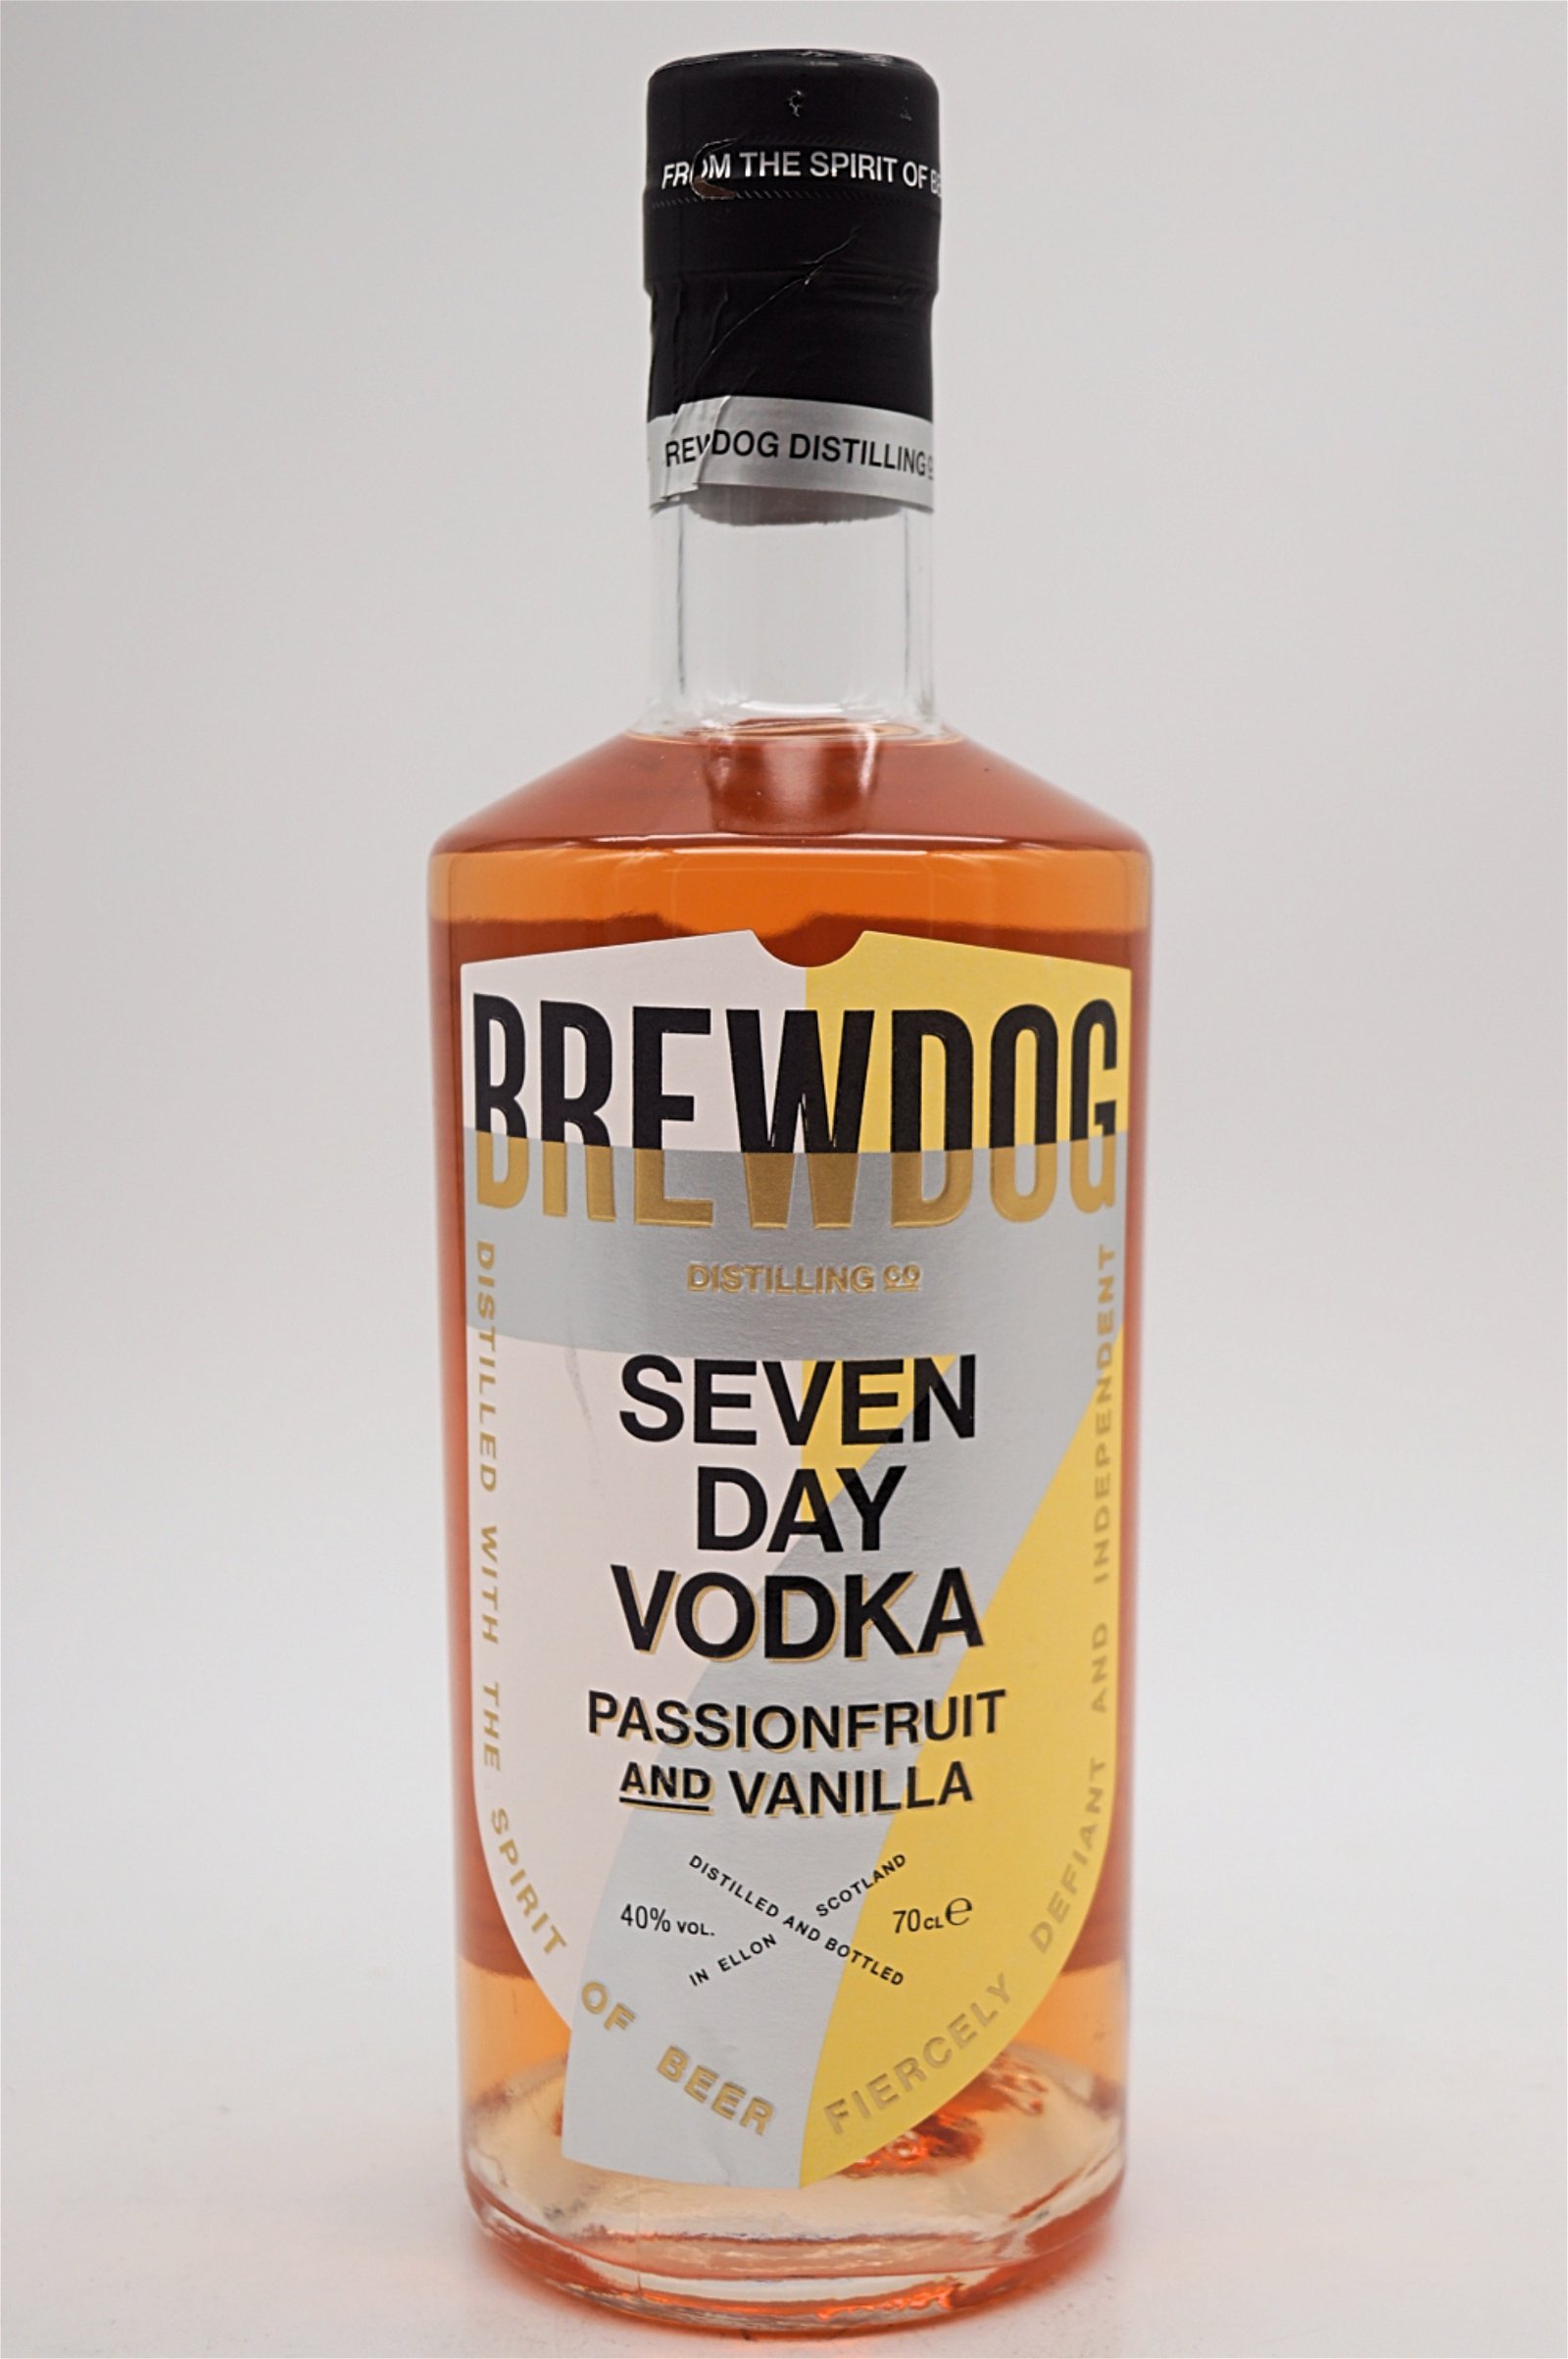 BrewDog Distilling Co. Seven Day Vodka Passionfruit and Vanilla